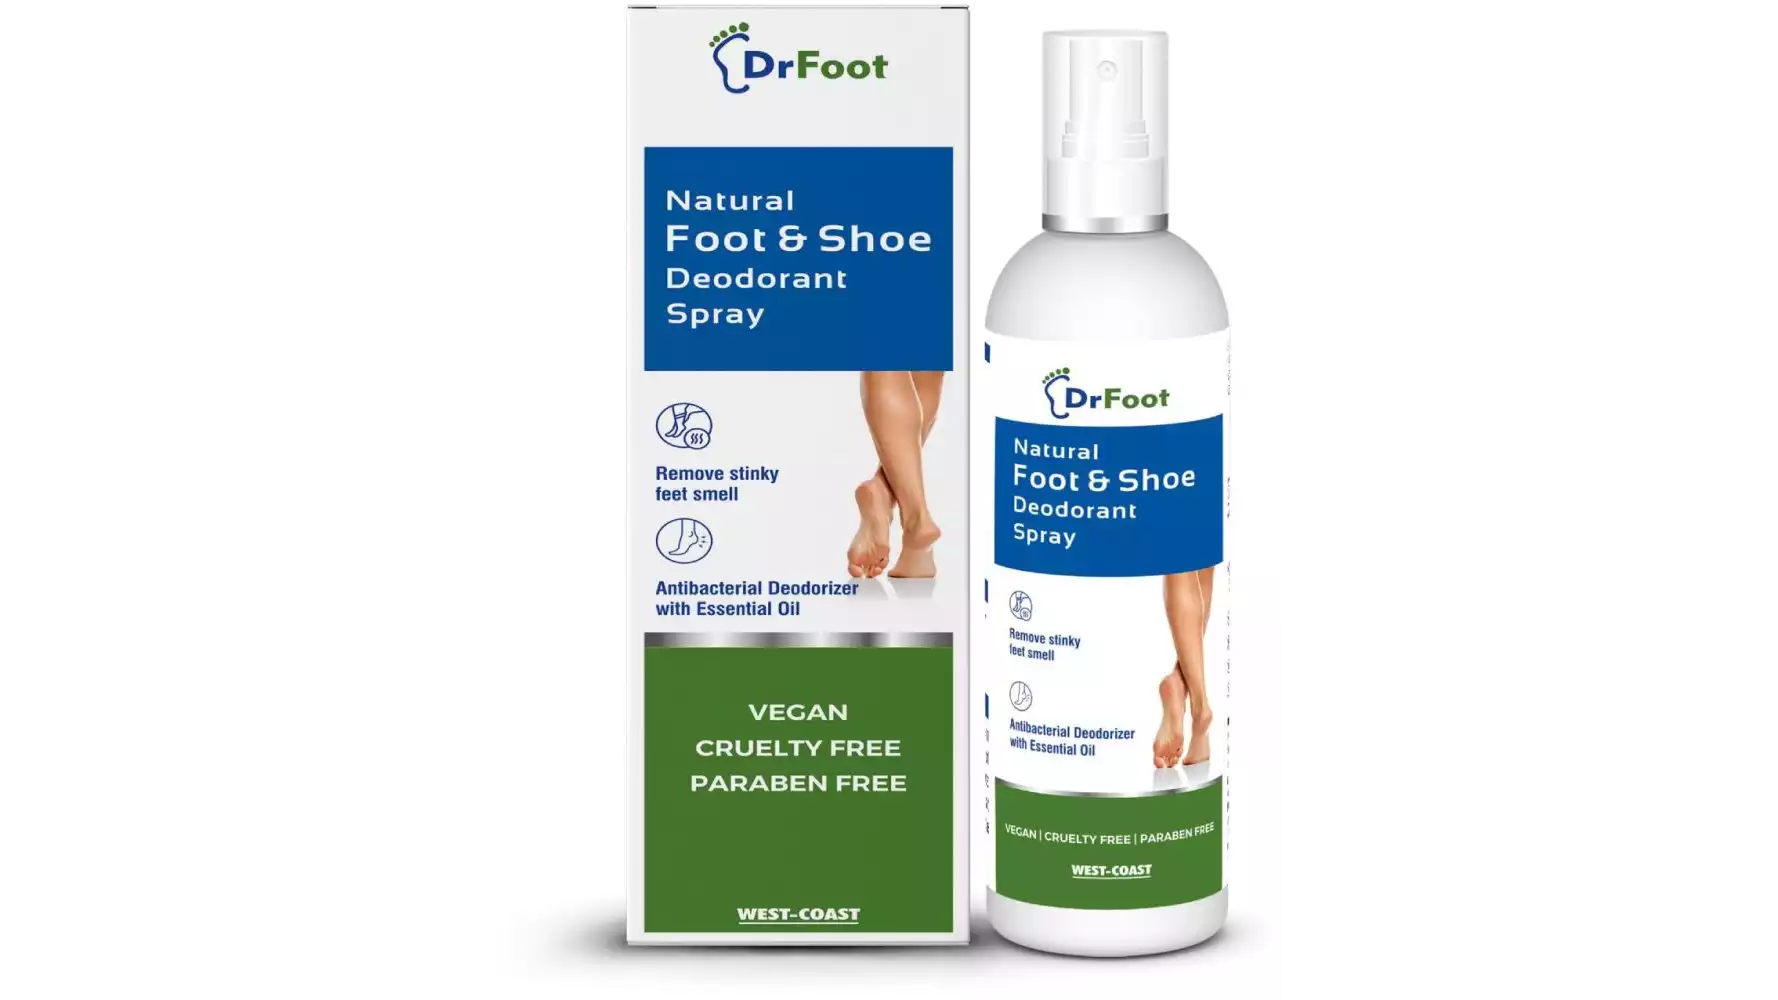 Dr Foot Natural Foot & Shoe Deodorant Spray (100ml)